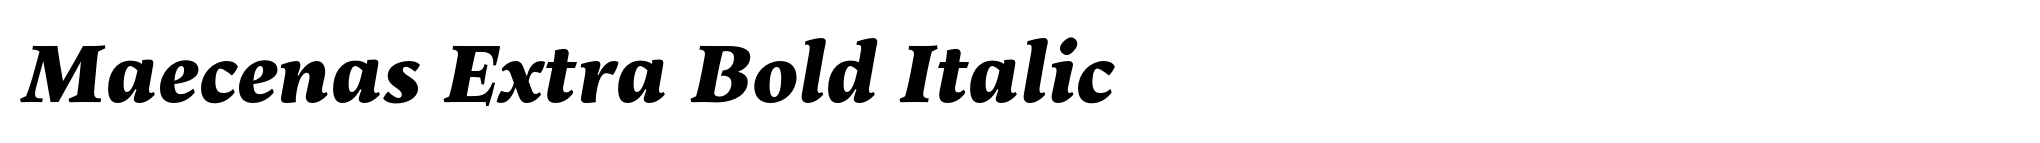 Maecenas Extra Bold Italic image